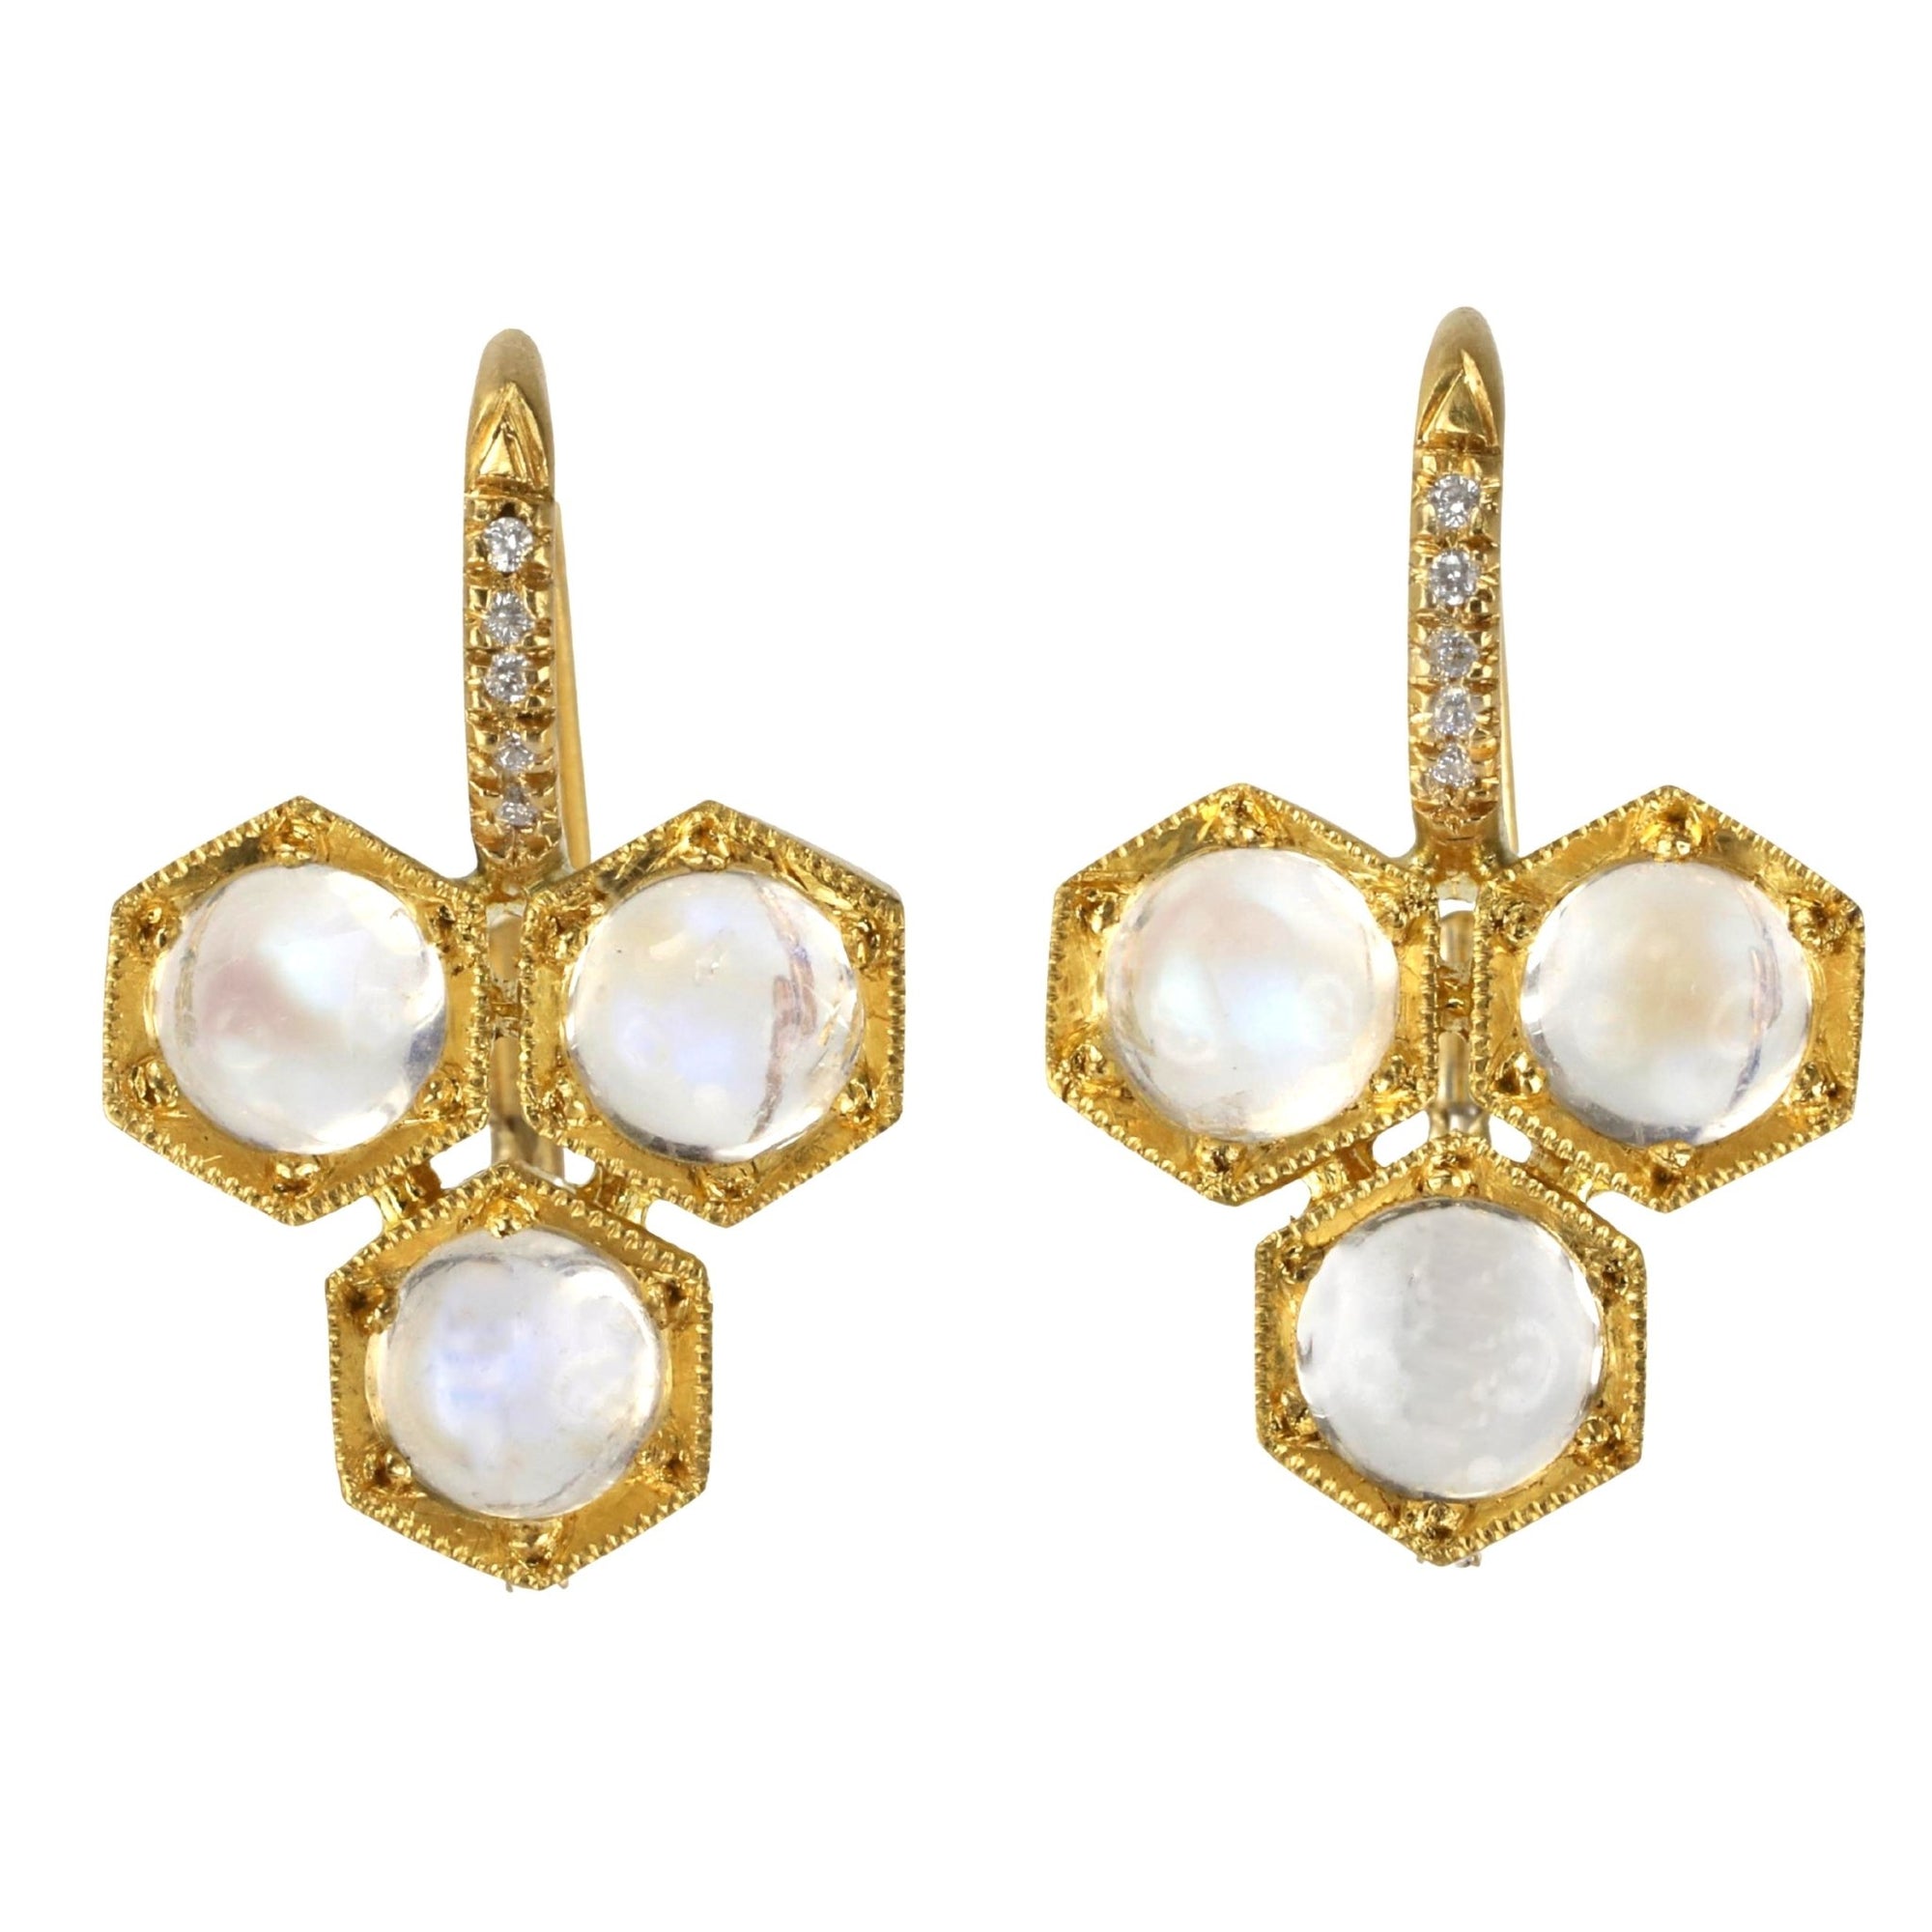 22K Gold Triple Hexagonal Rainbow Moonstone Earrings with Pave Diamond Details